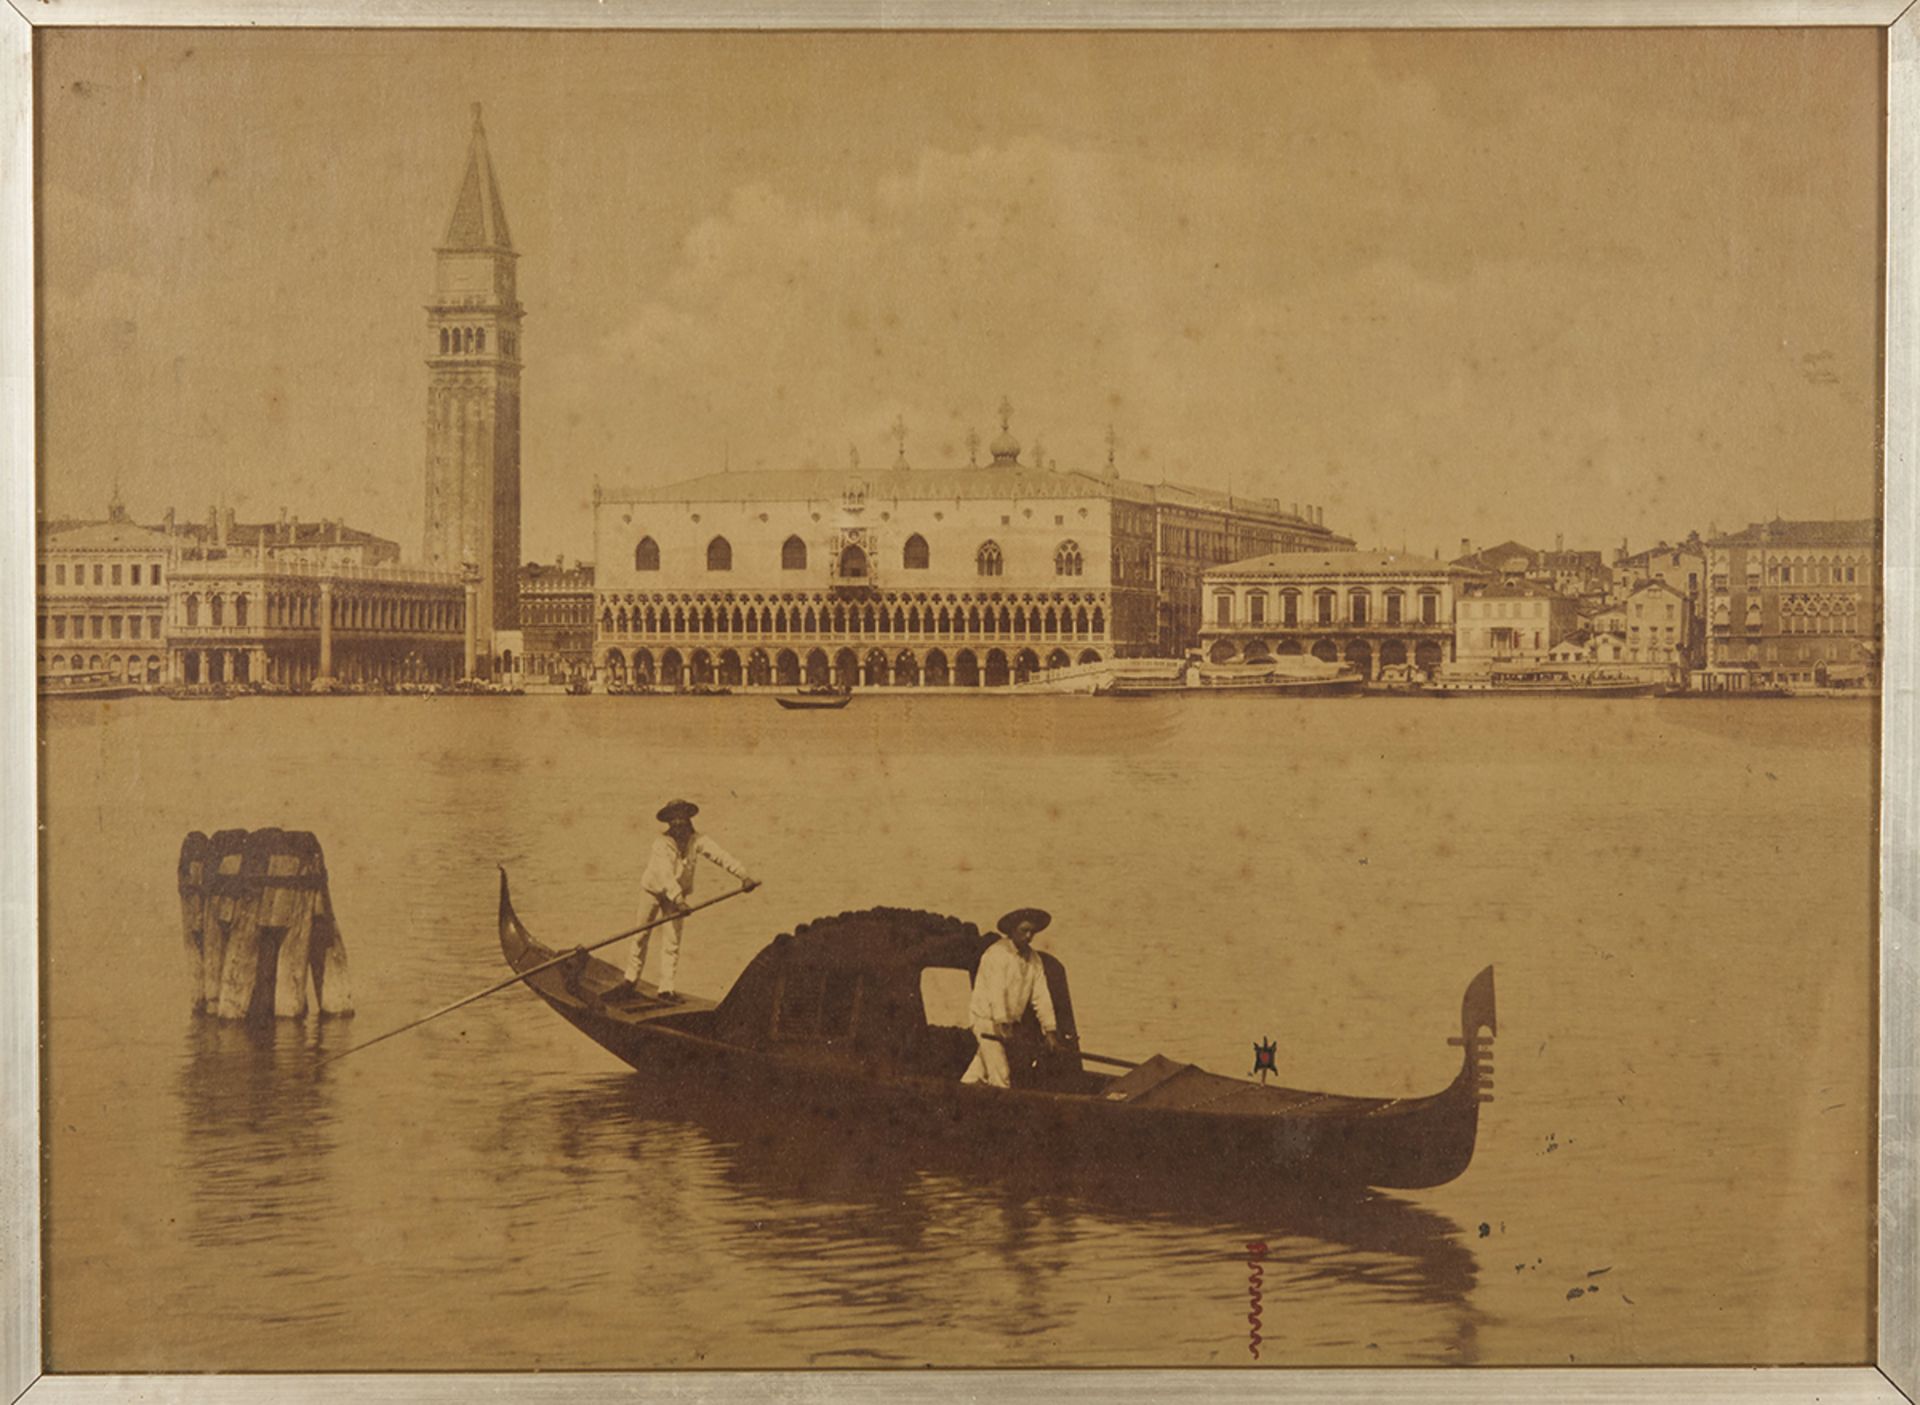 ANTIQUE PHOTOGRAPH, DOGE PALACE VENICE, 19TH CENTURY - Image 2 of 5